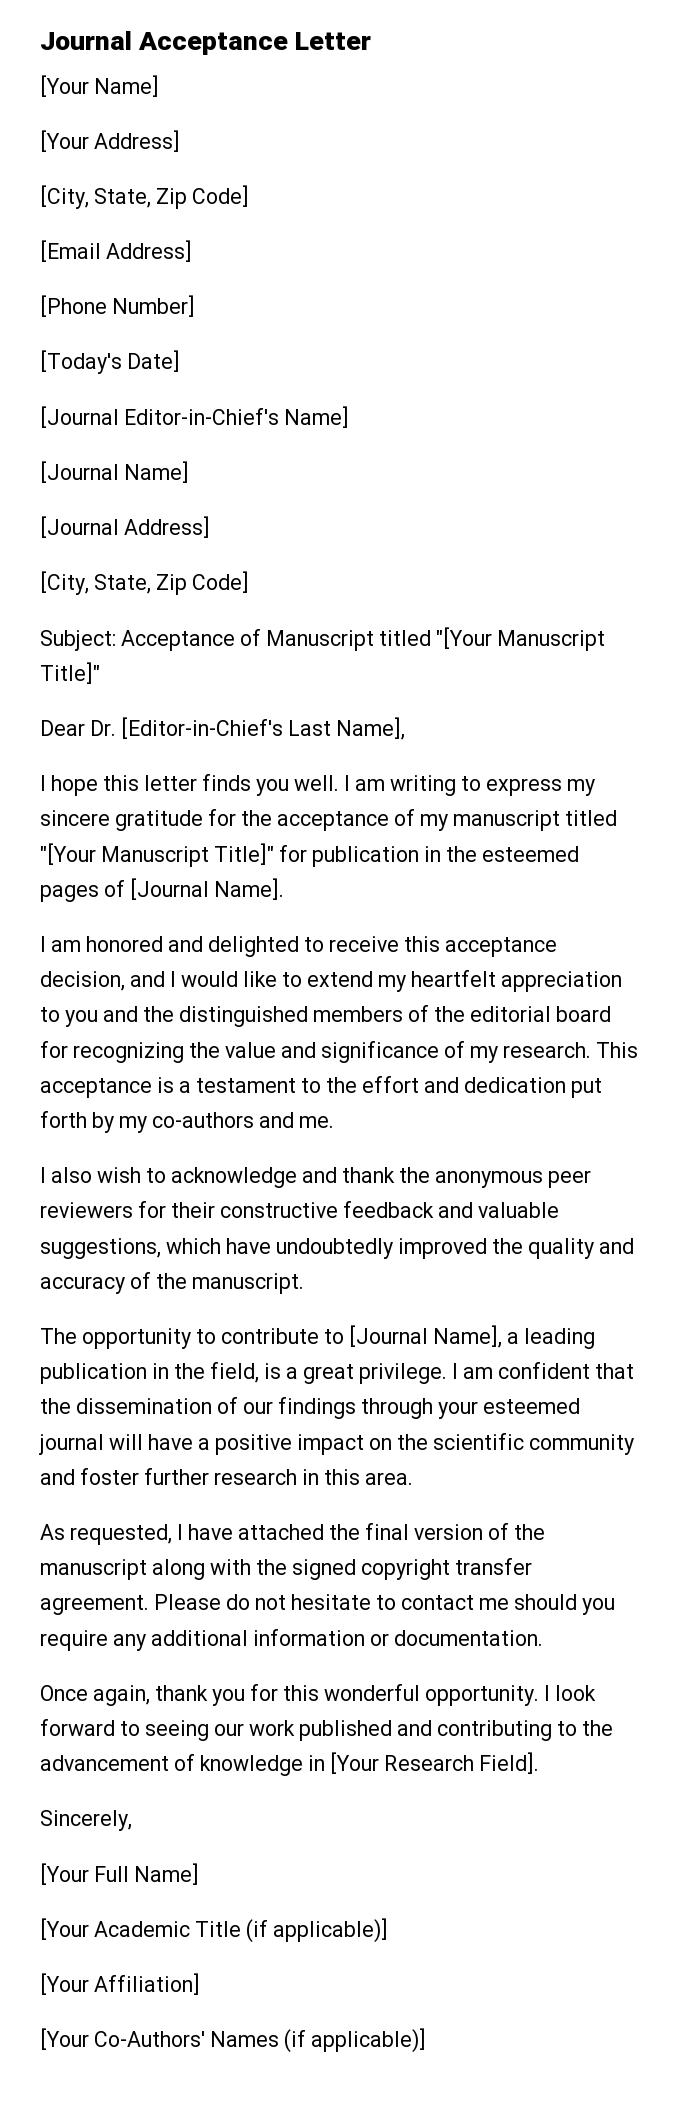 Journal Acceptance Letter